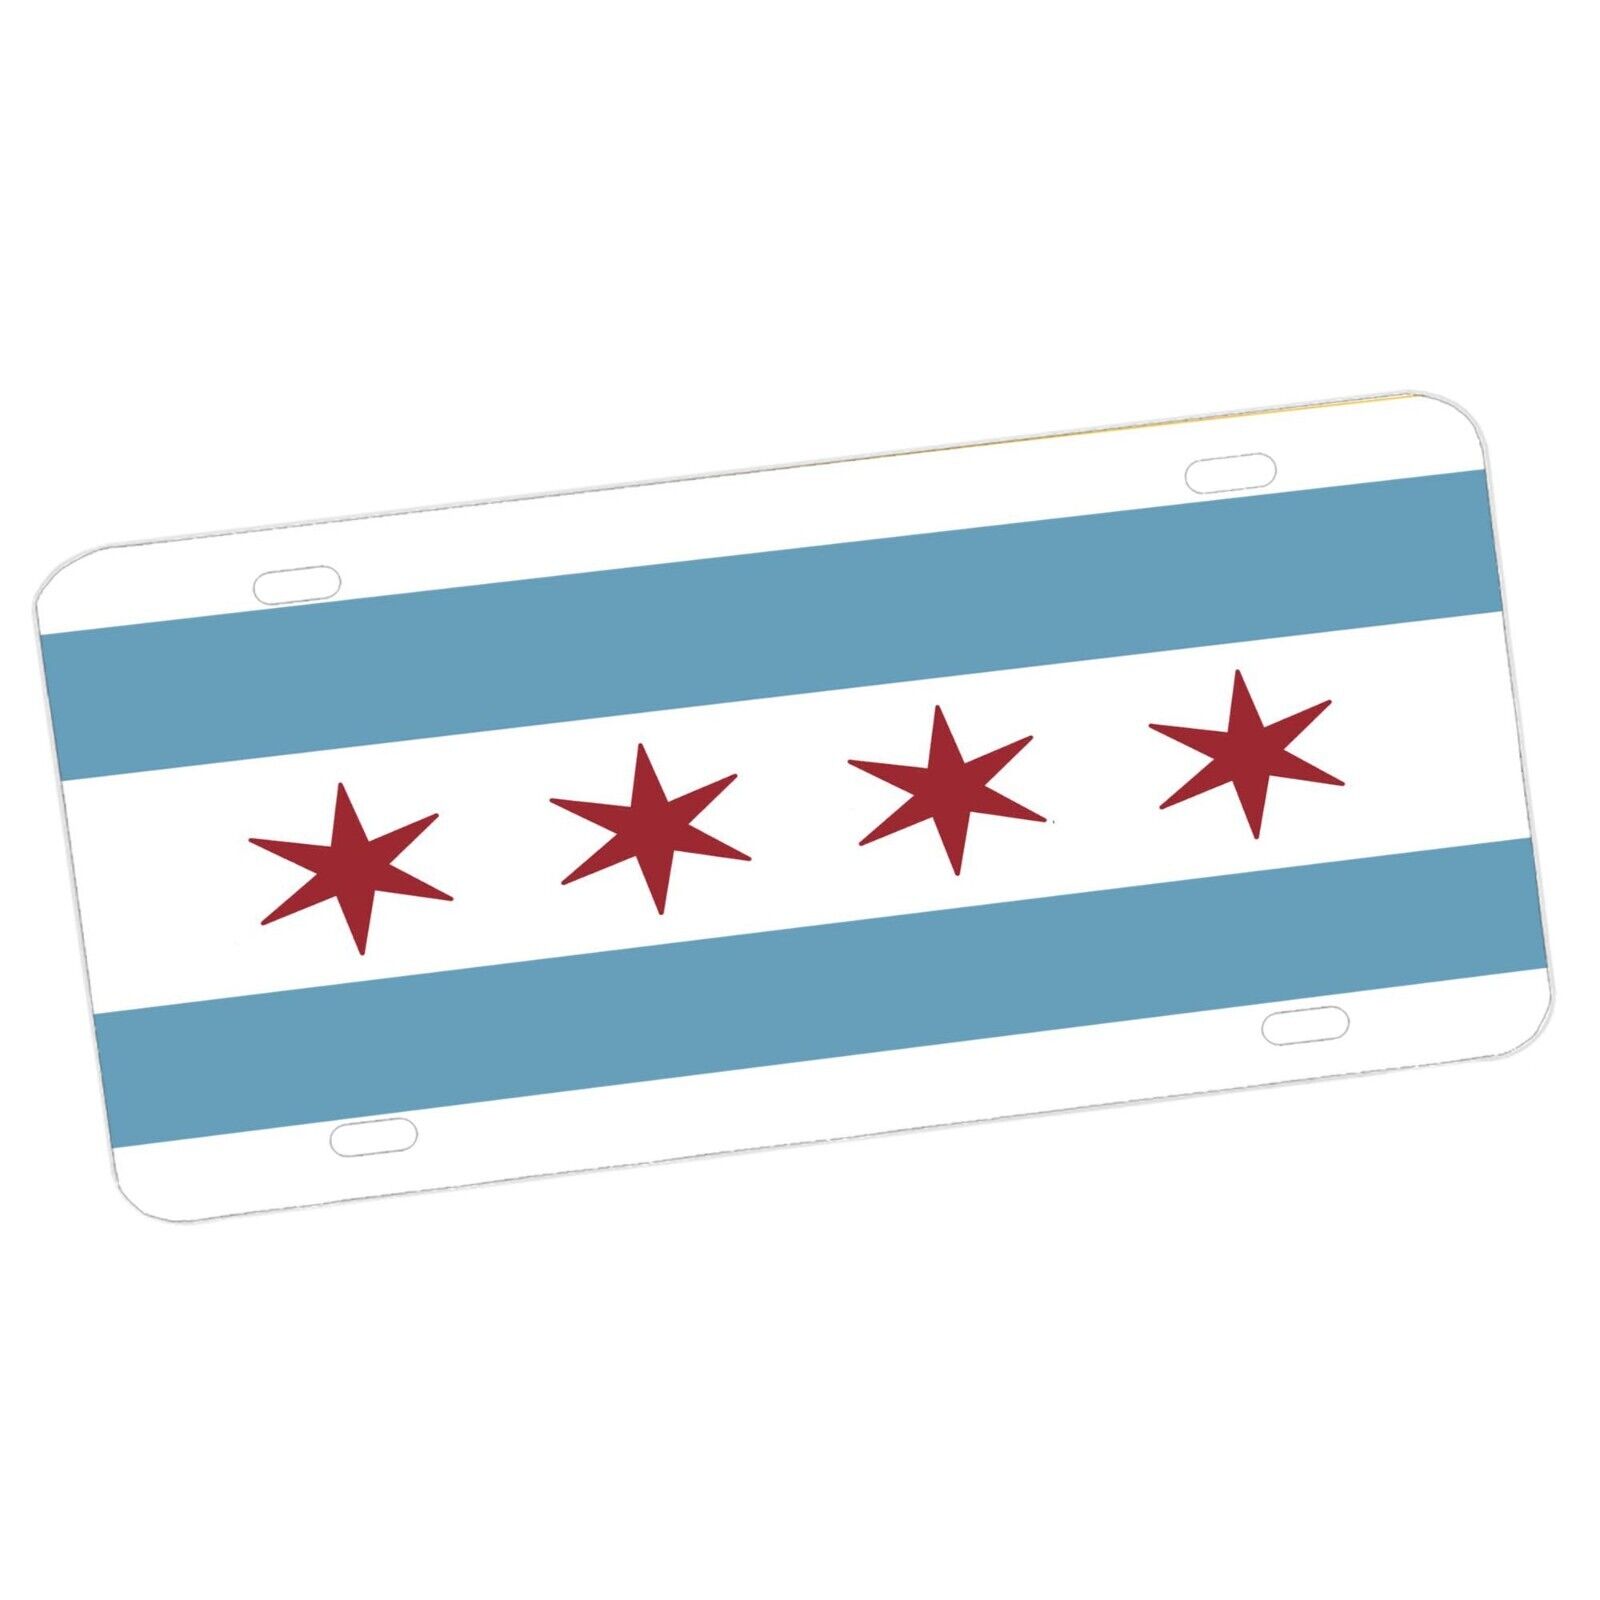 Chicago Police Department Patrol Car and Flag Design Aluminum License Plate